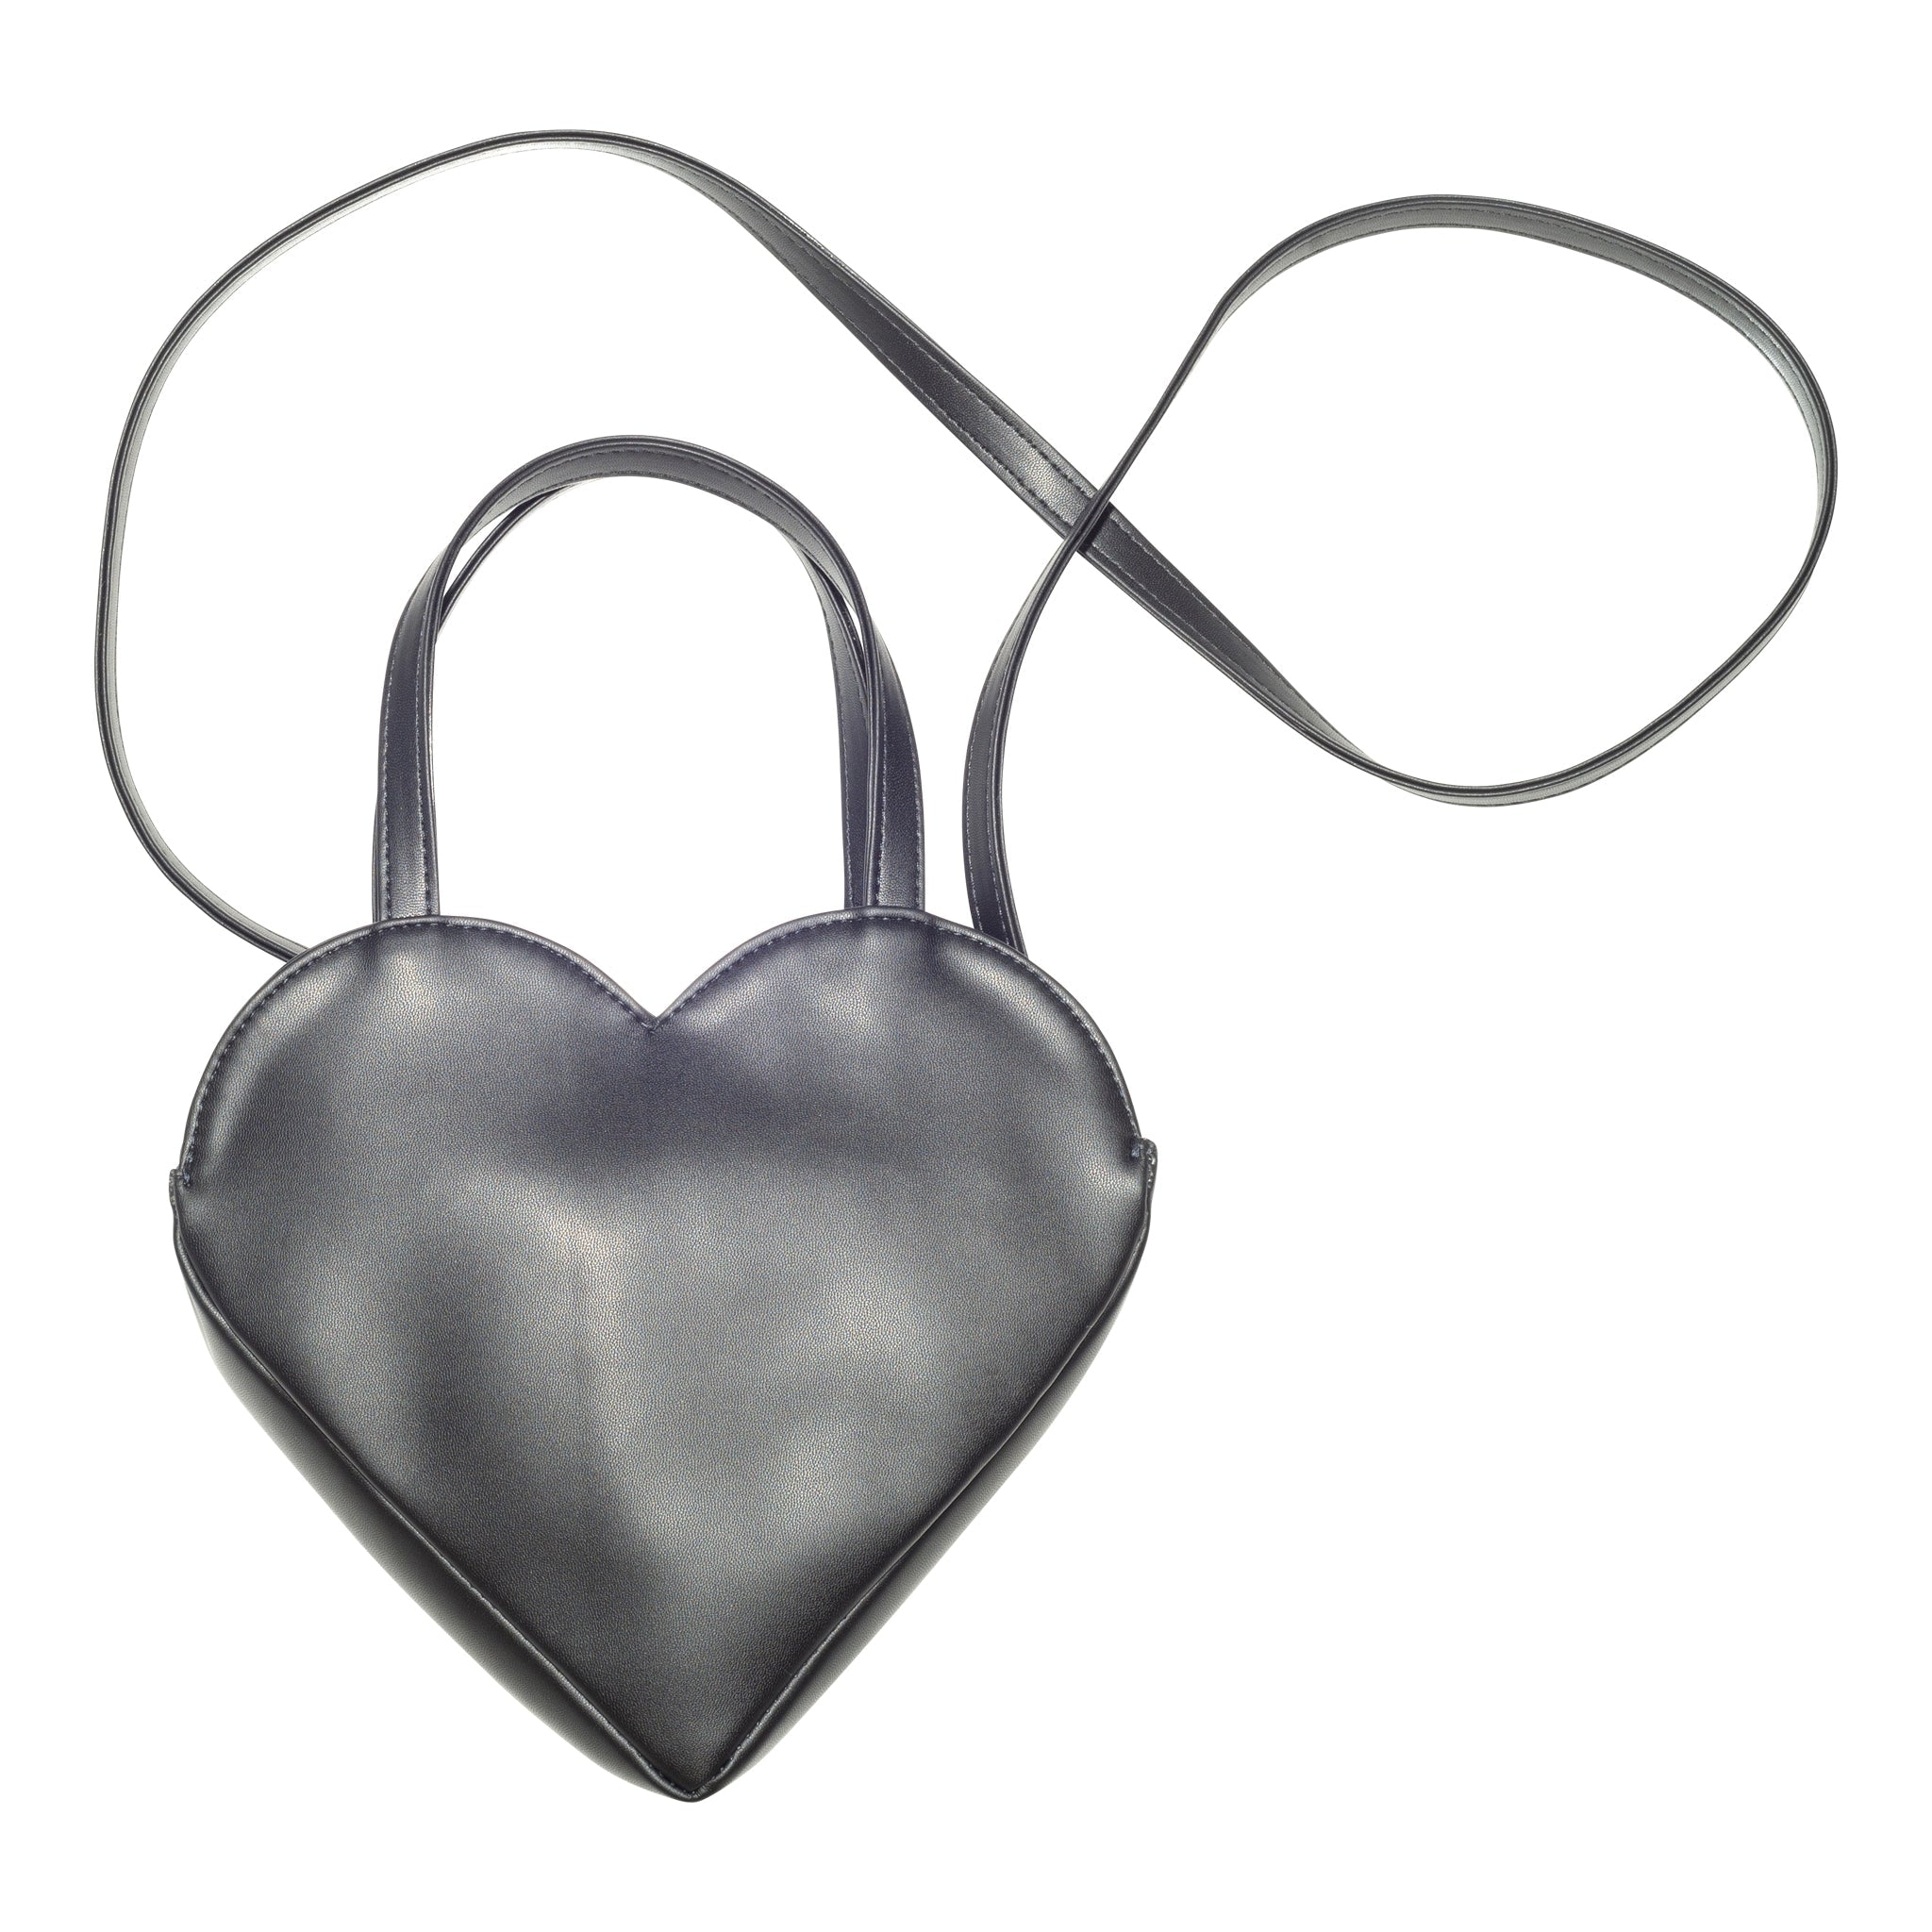 Black Heart Shaped Design Purses and Handbags Fashion Crossbody Bags Pu  Leather